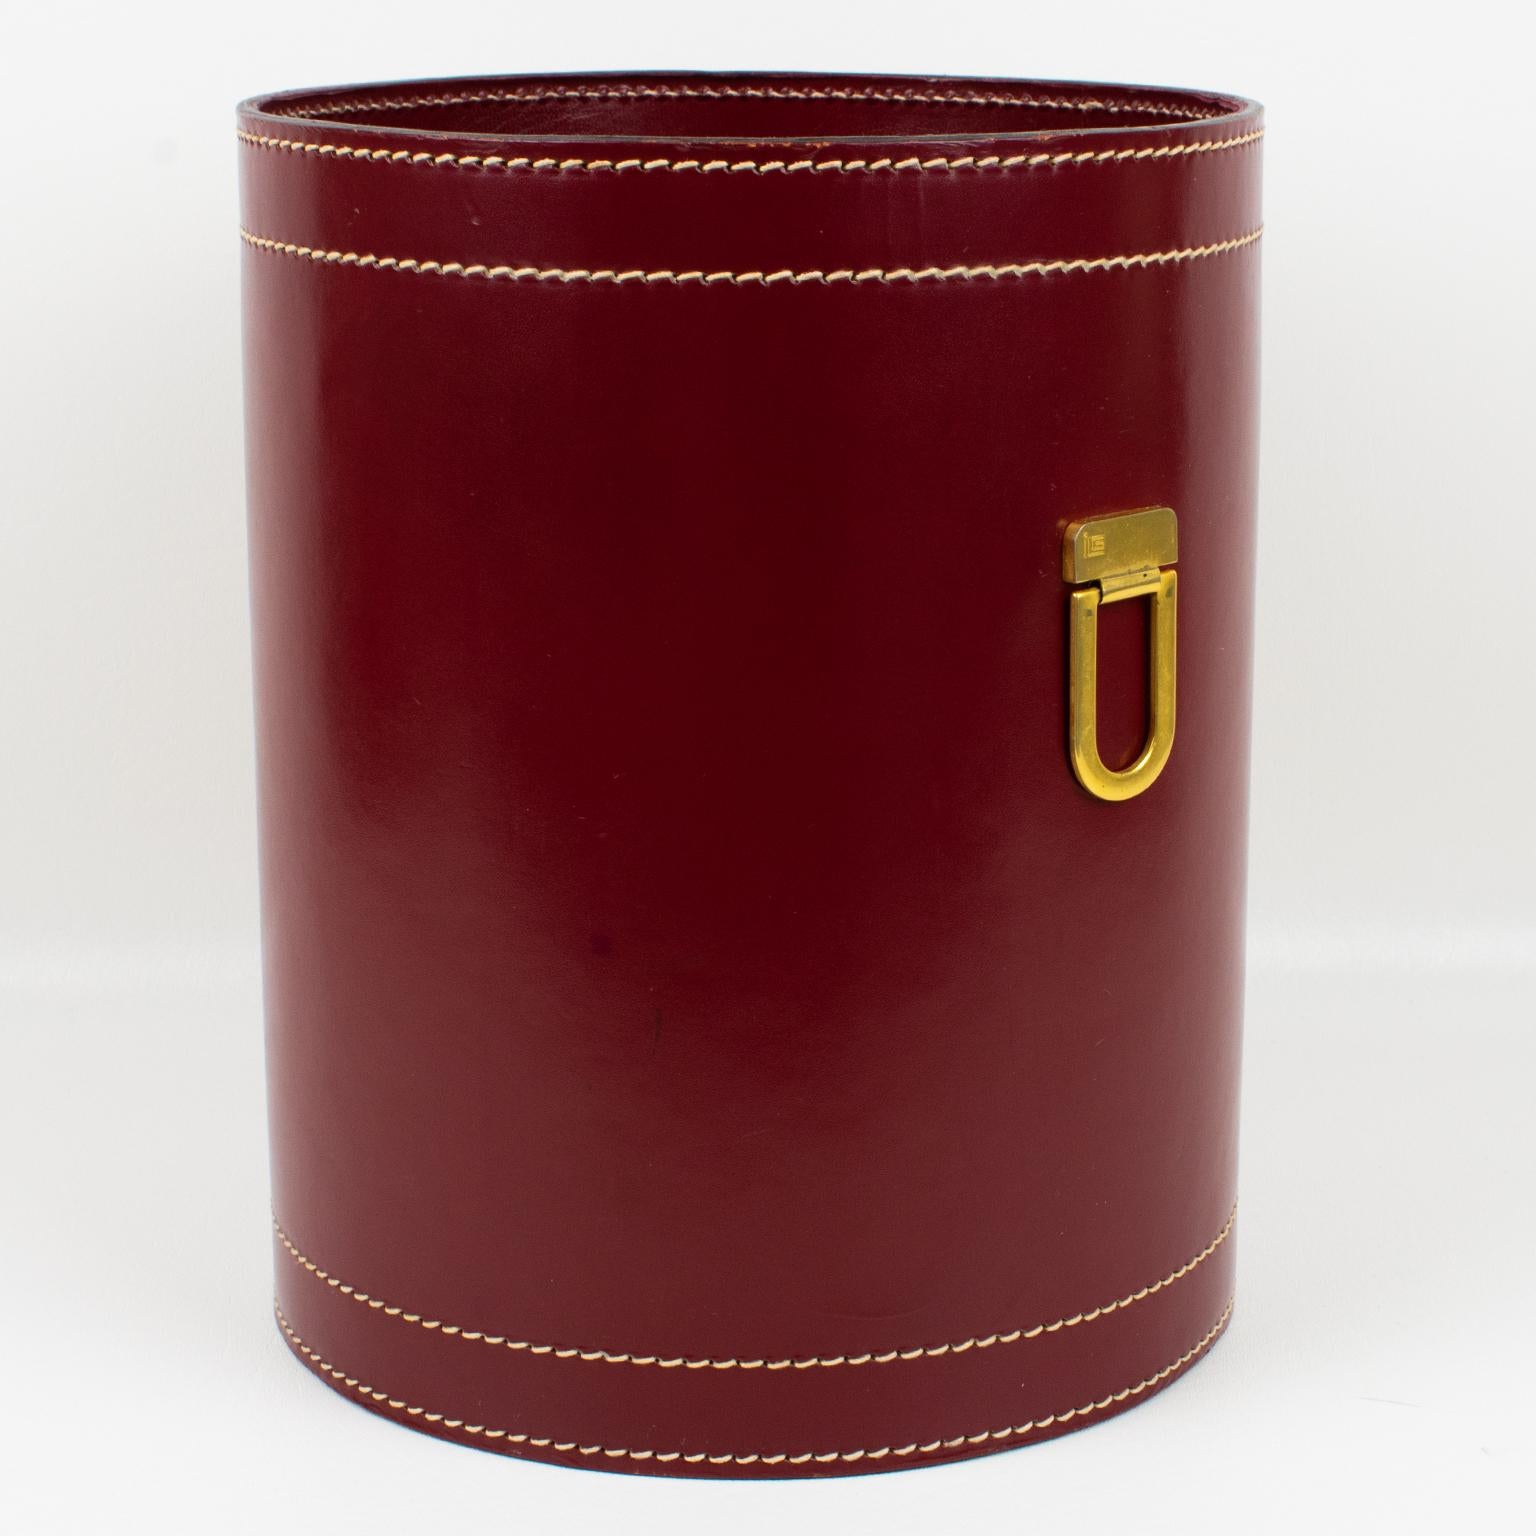 Belgian Art Deco Hand-Stitched Red Leather Desk Office Paper Waste Basket